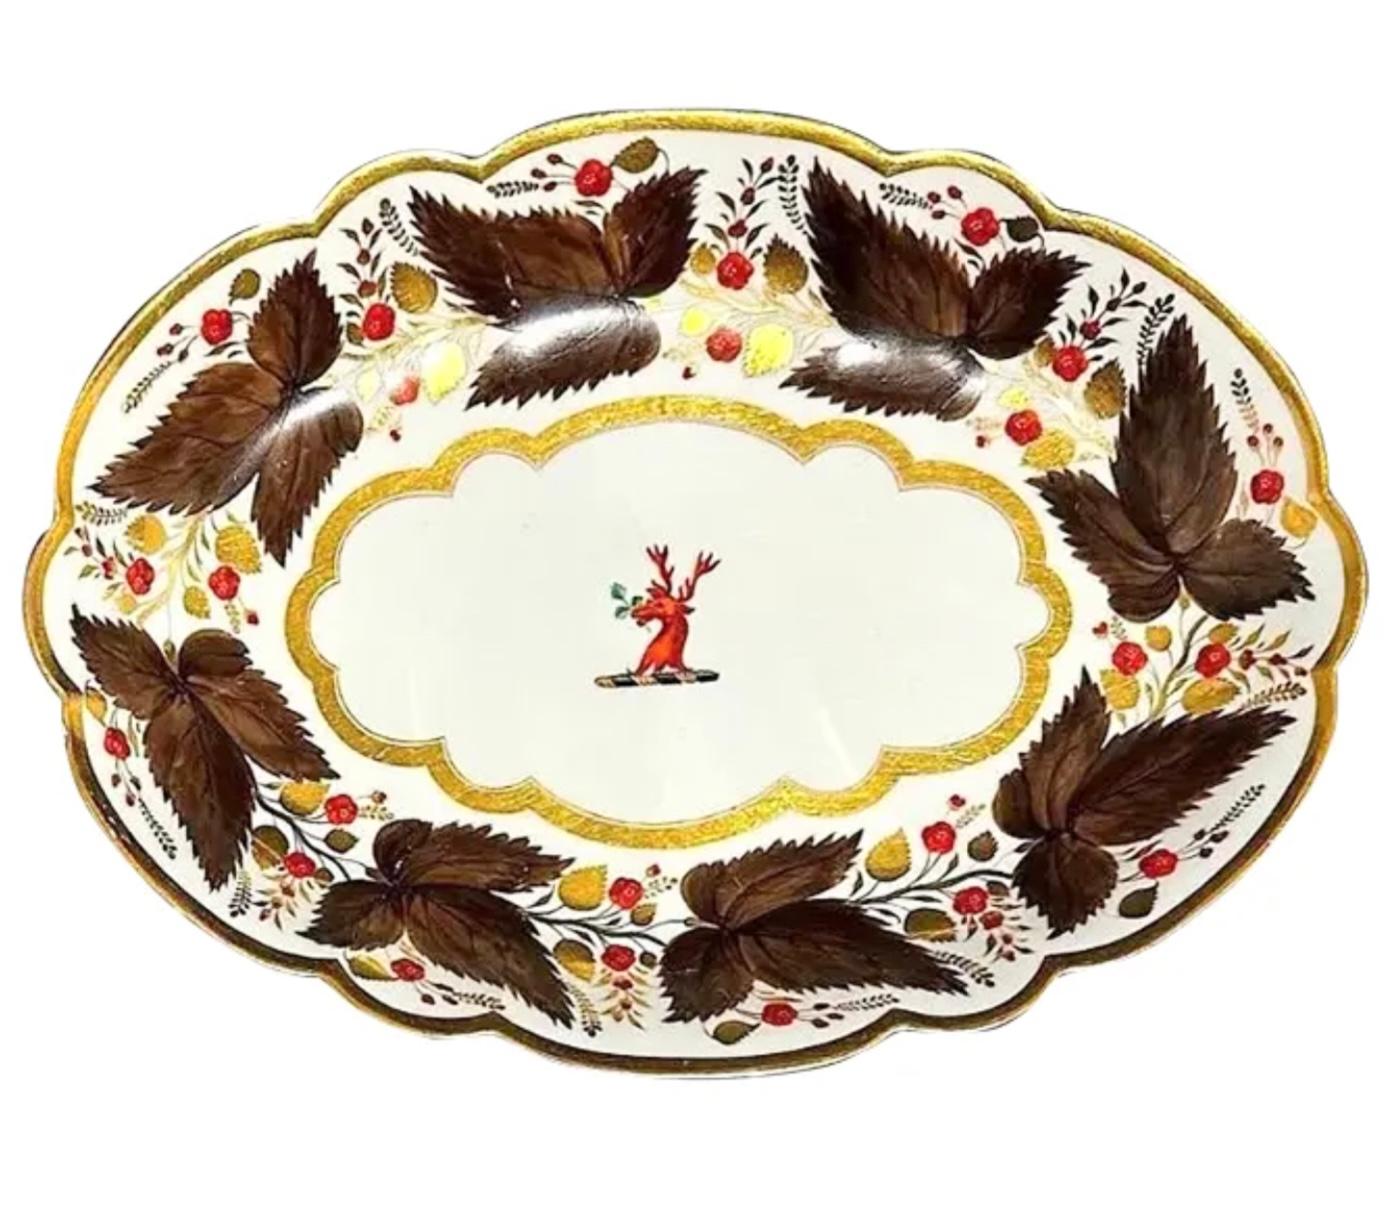 Regency Flight Barr & Barr Oval Platter or Tray w Brown Vines & Berries, 1815-1820 For Sale